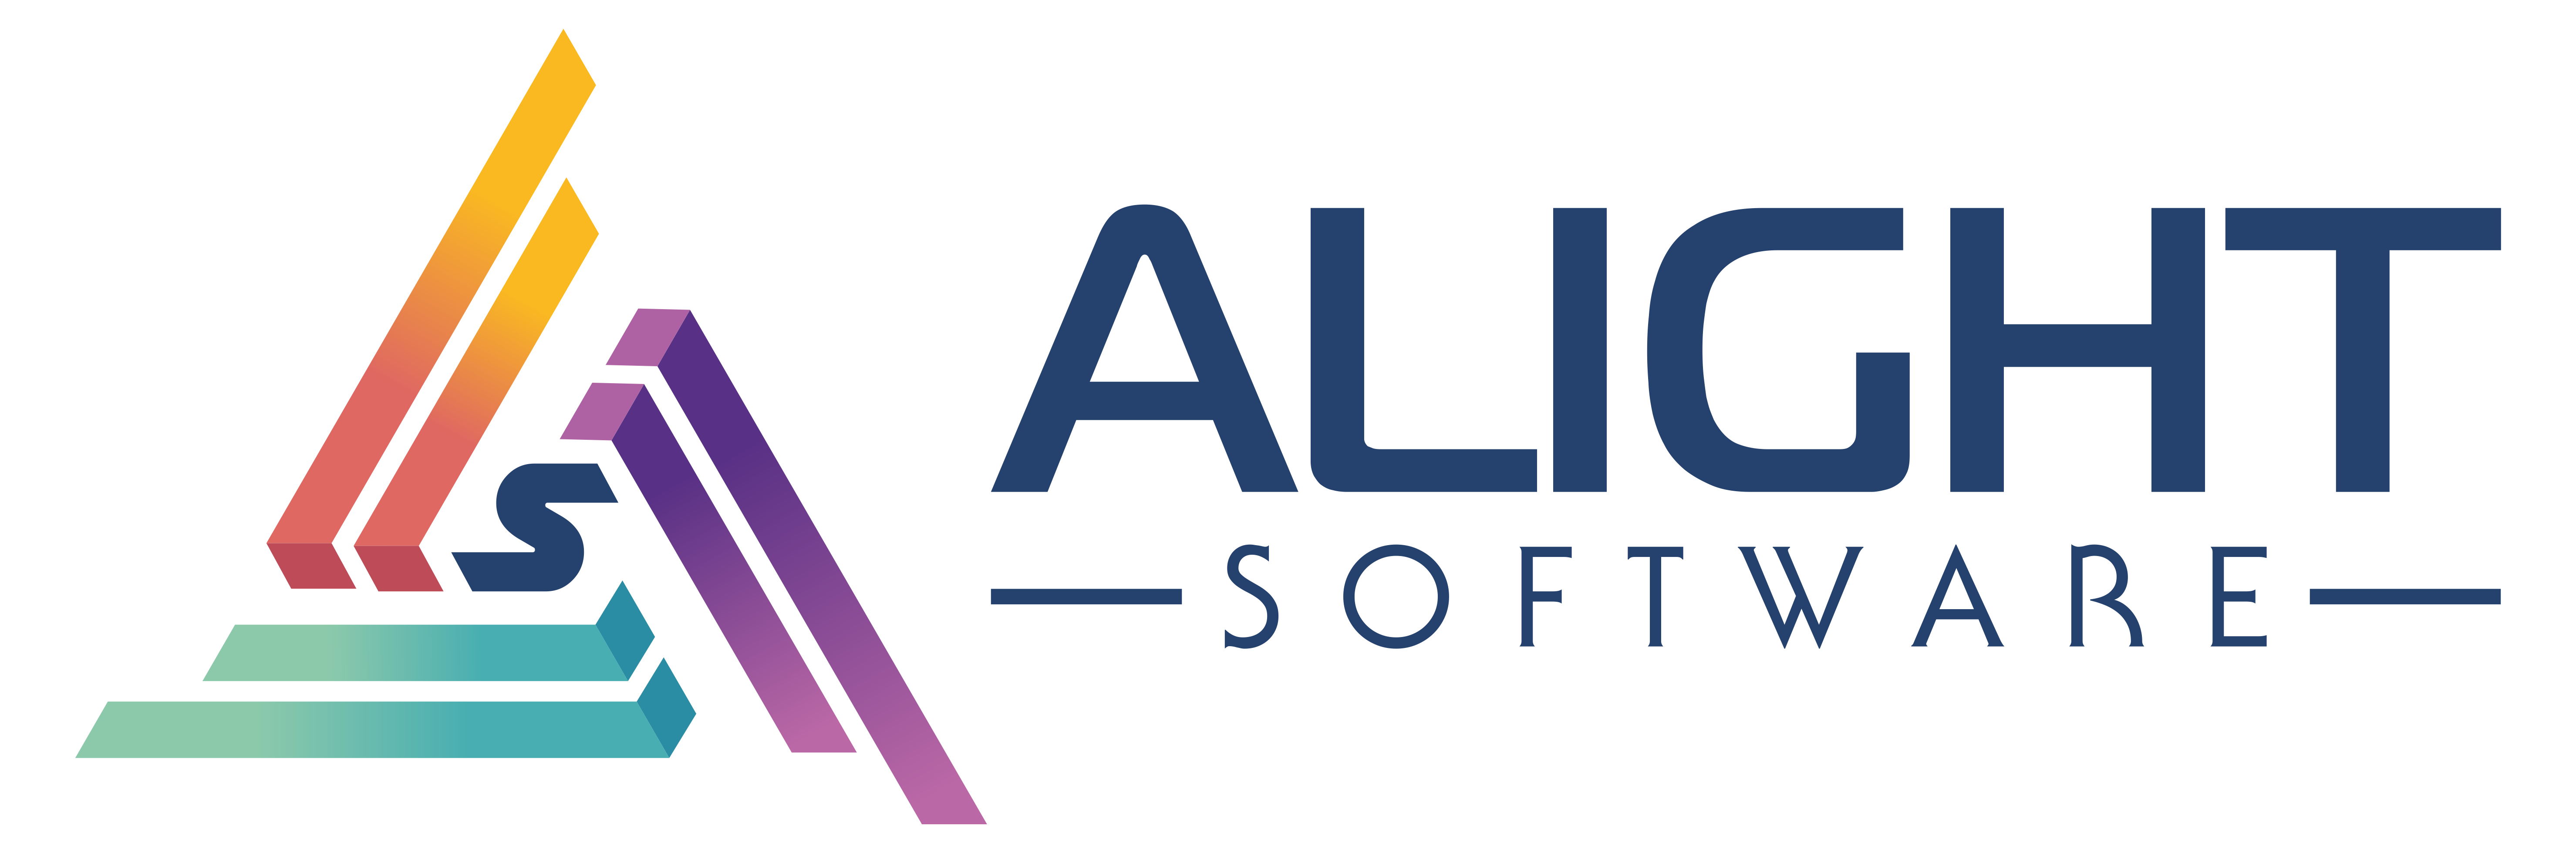 Alight Software Logo Pmg.png